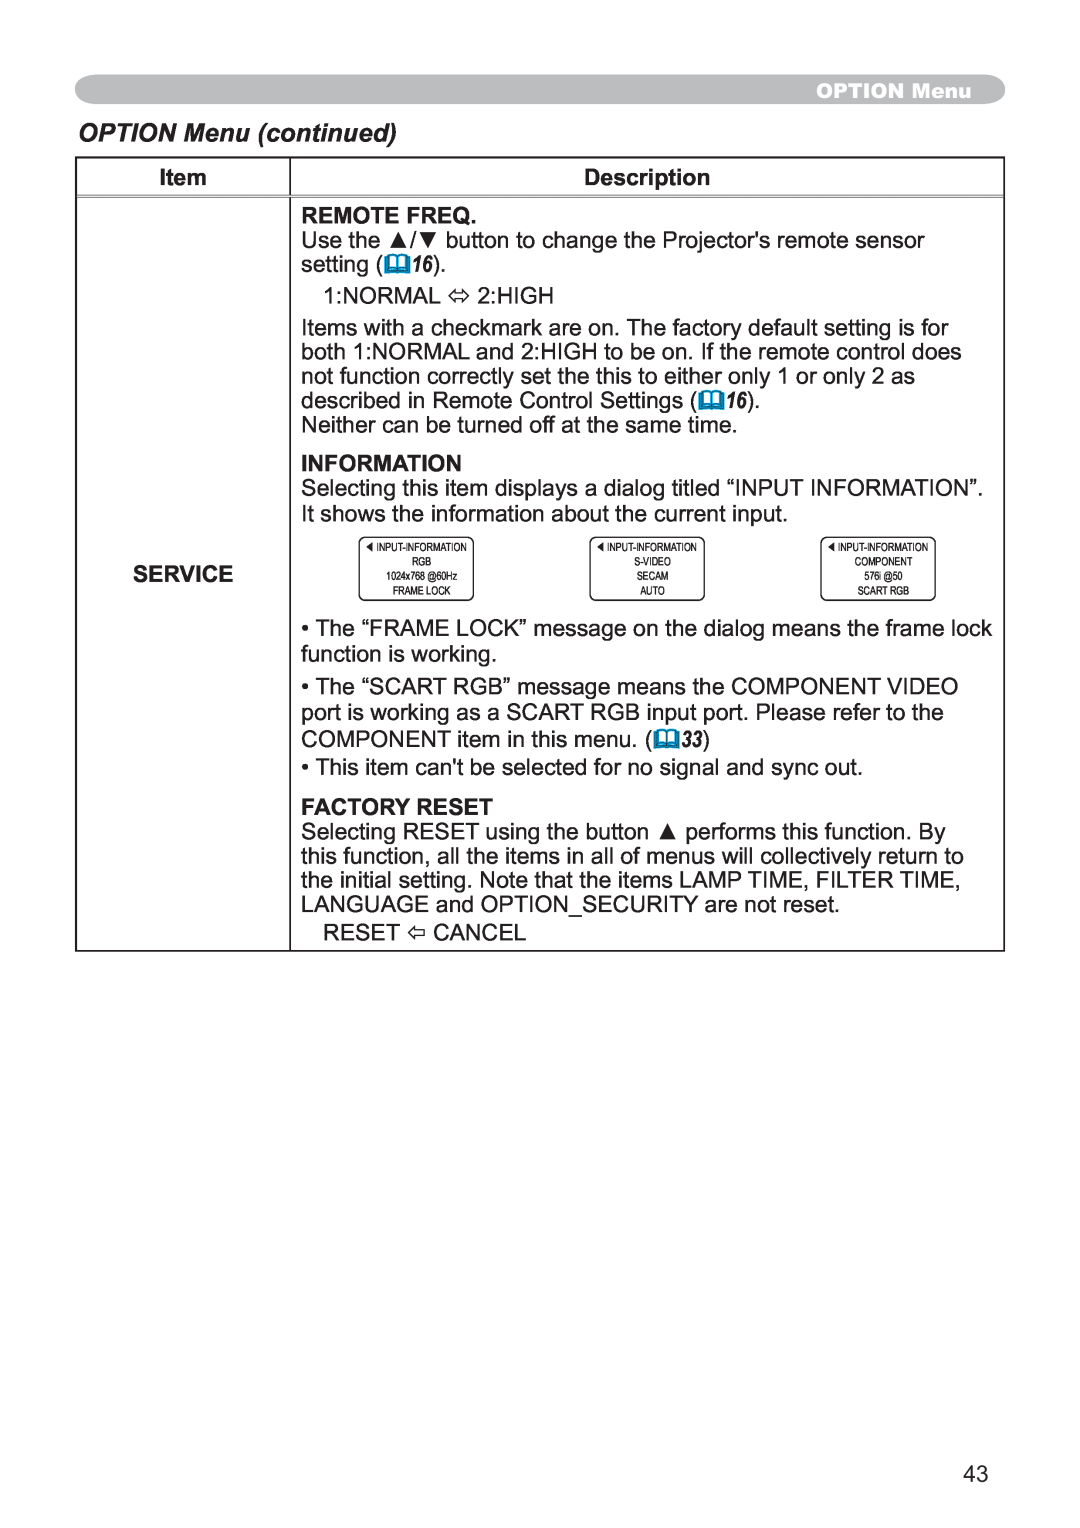 Hitachi CP-X251 user manual OPTION Menu continued, Description, Remote Freq, Information, Service 